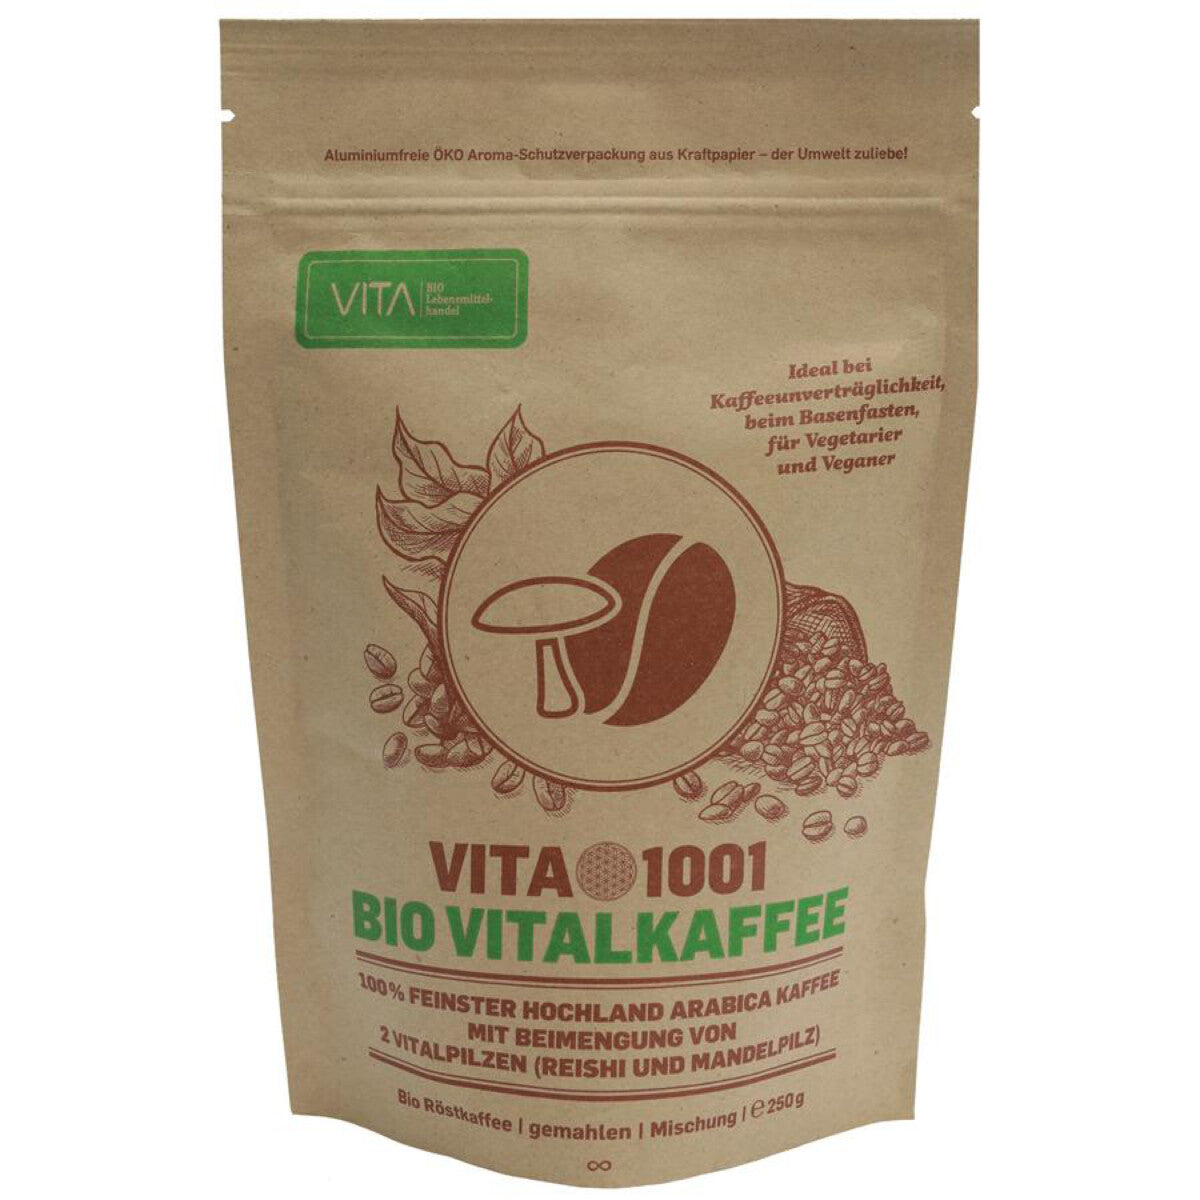 VITA BIO Vitalkaffee mit Vital-Pilzen - 250 g